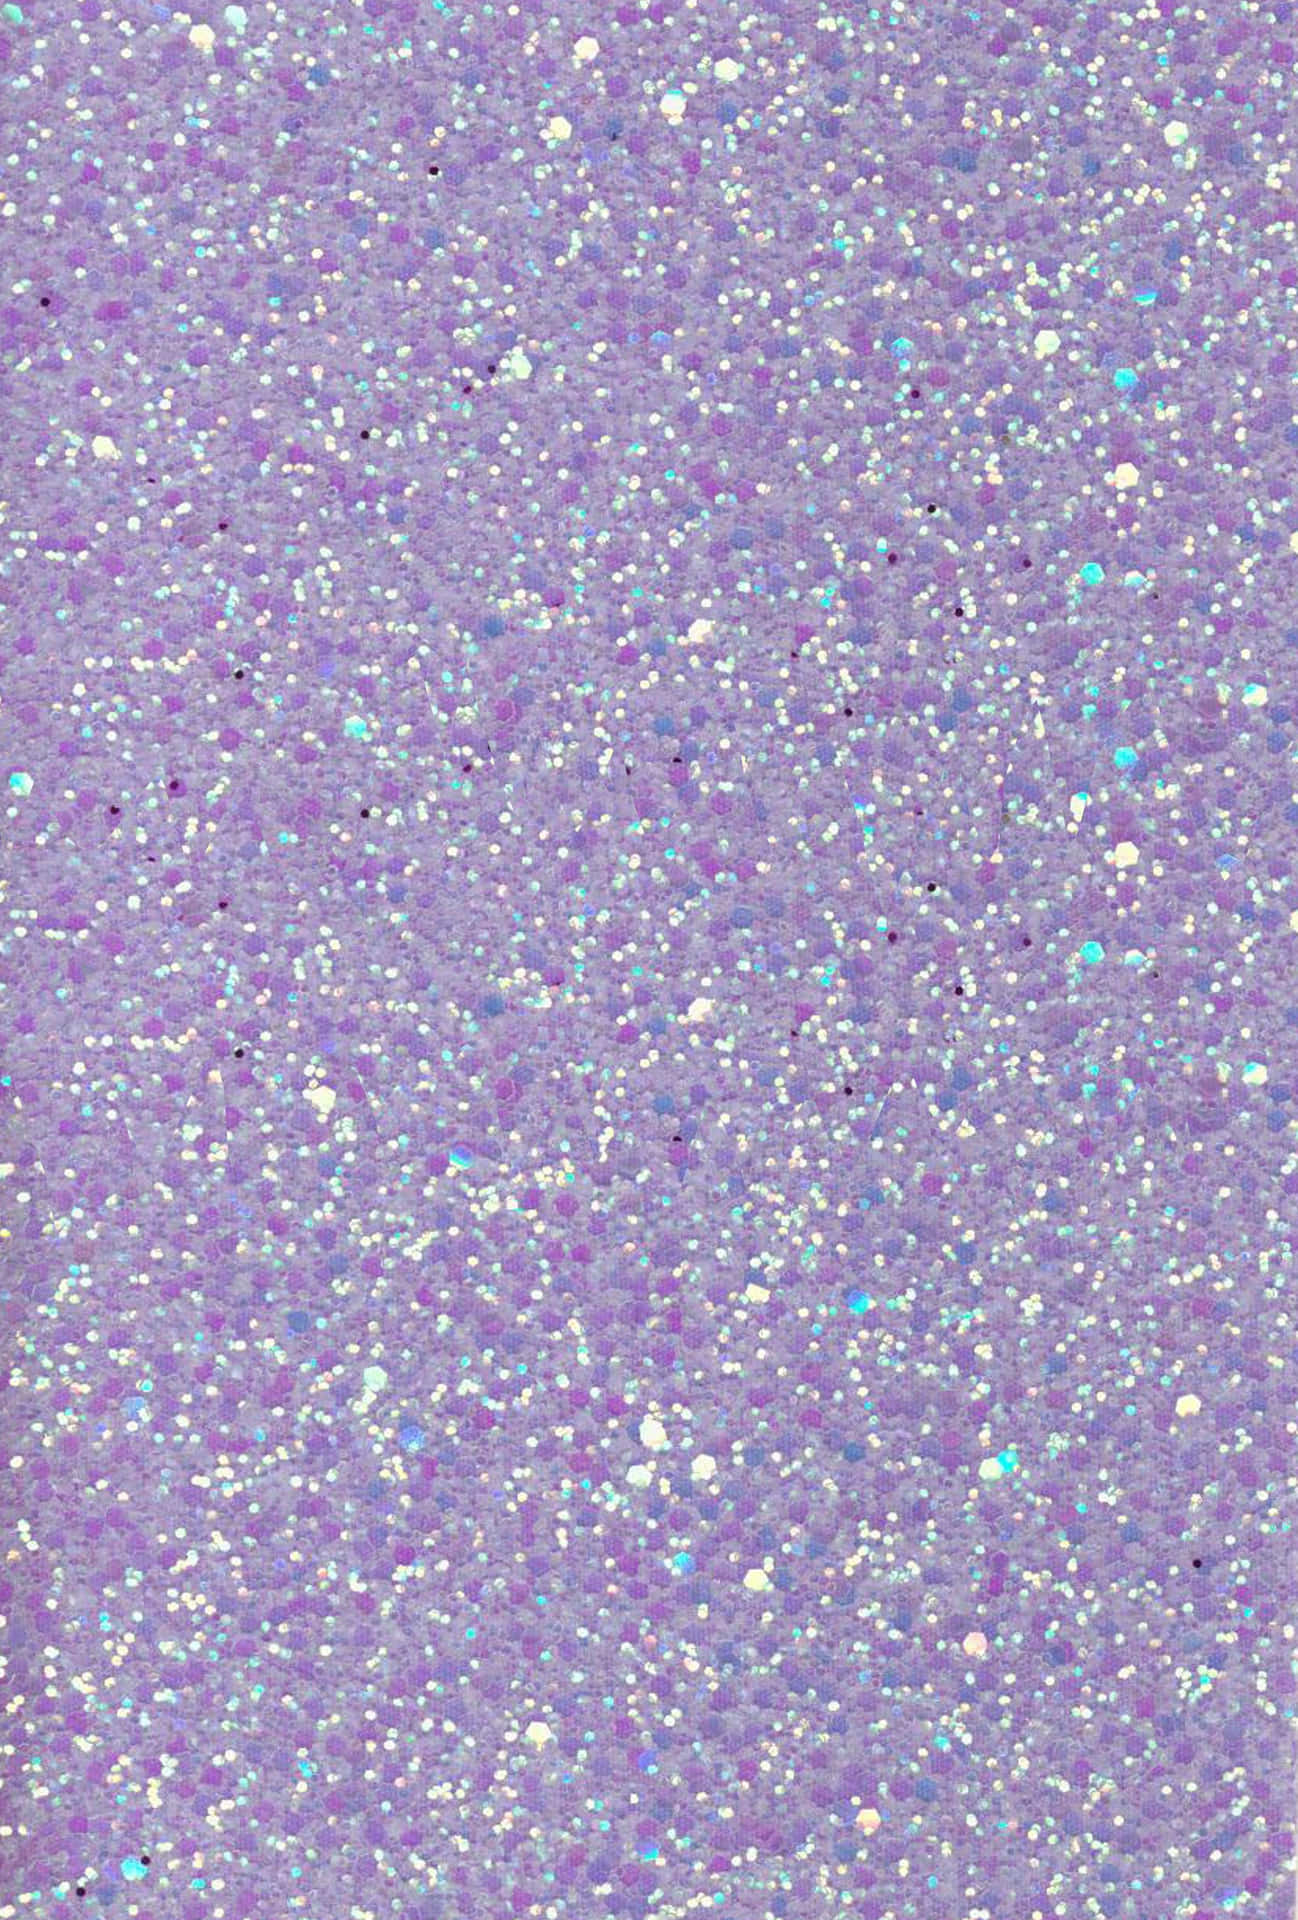 Magical Light Purple Glitter